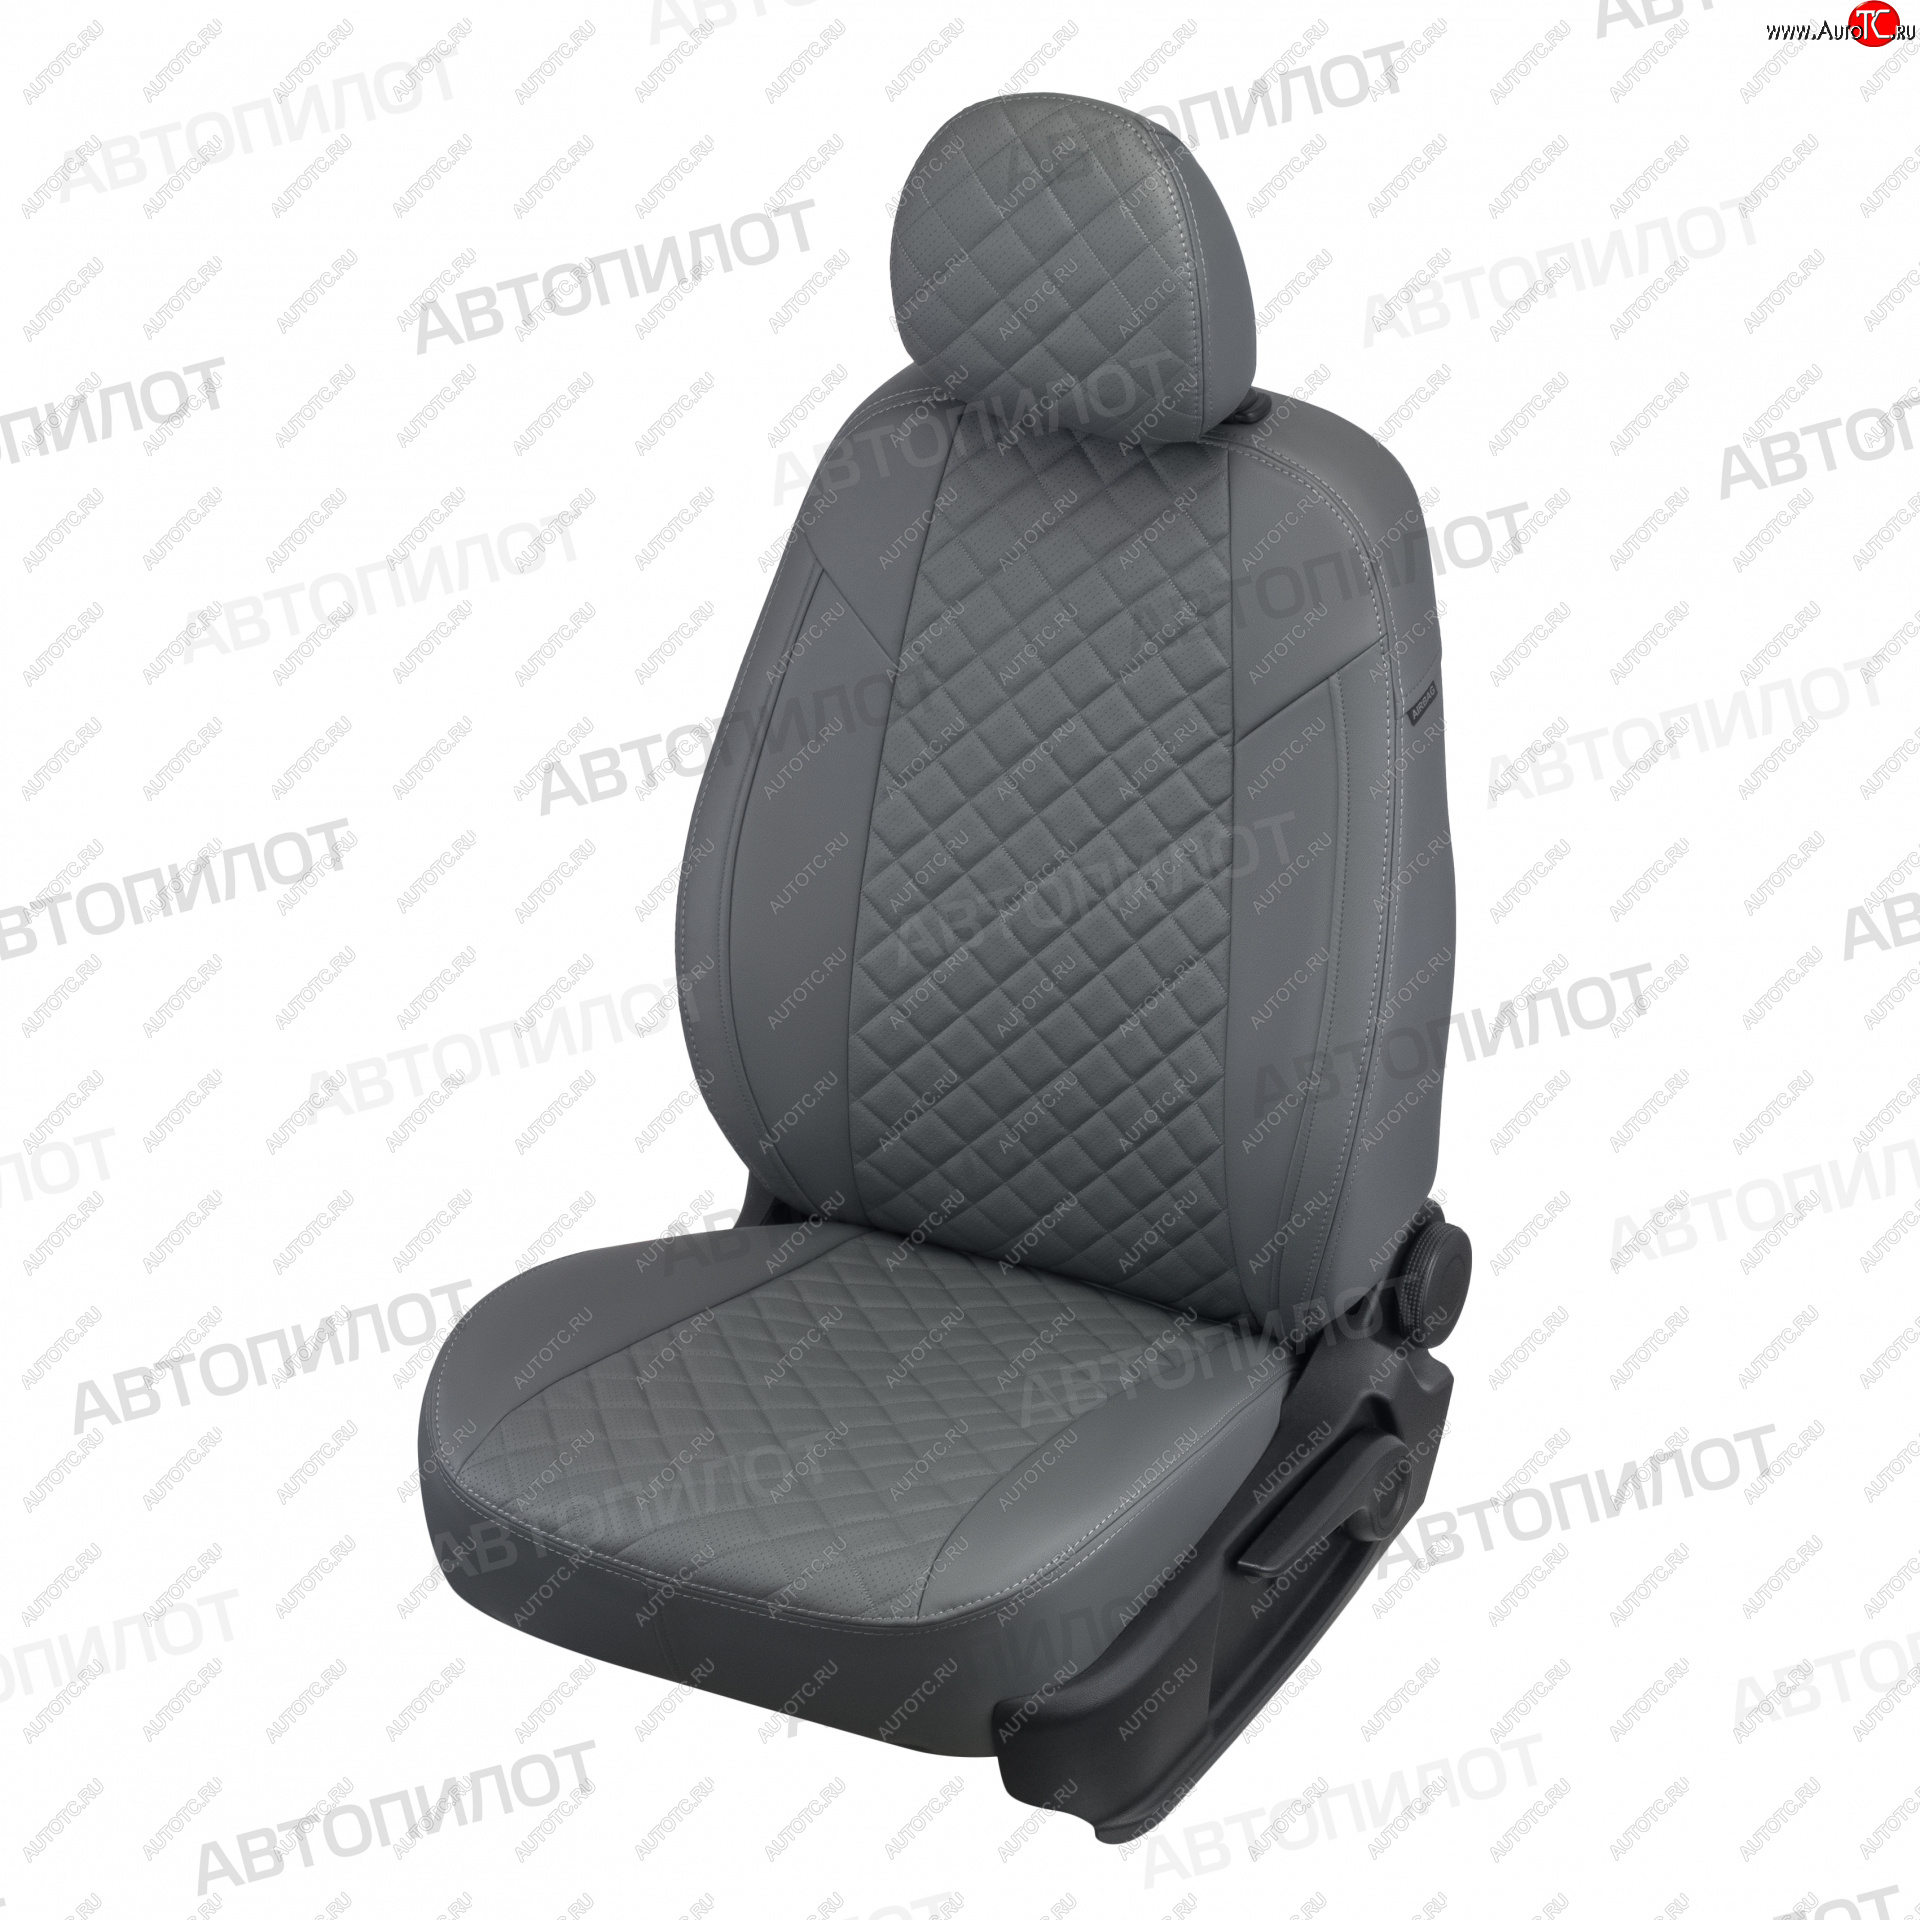 13 999 р. Чехлы сидений (экокожа) Автопилот Ромб  Hyundai Santa Fe  1 (2000-2012) (серый)